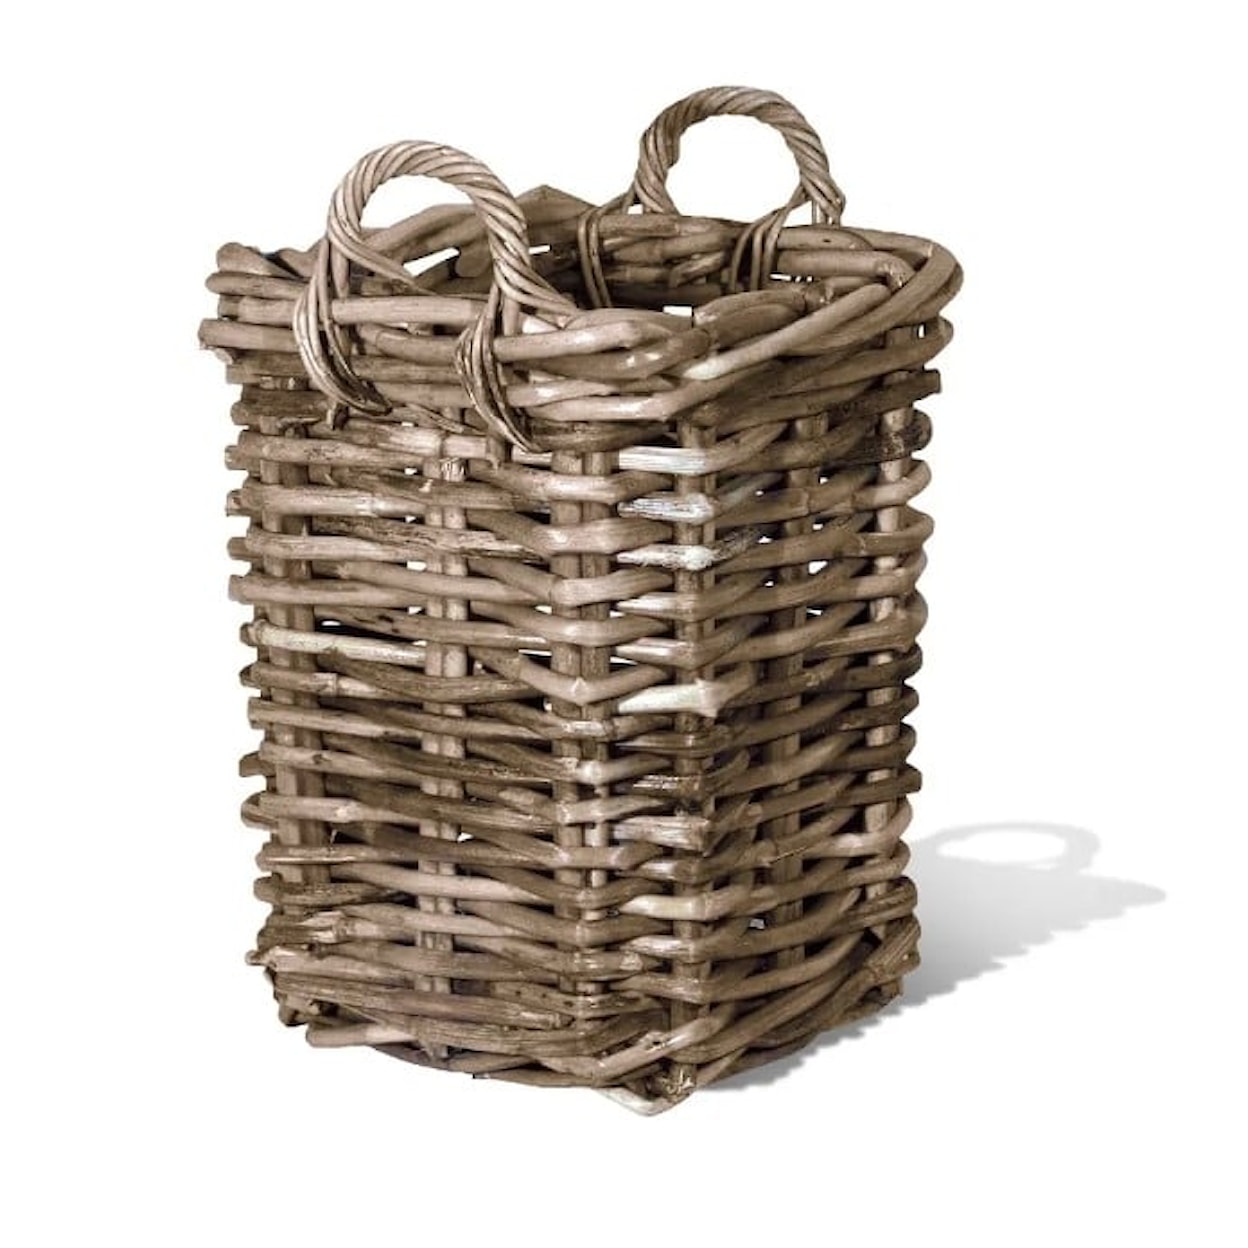 Ibolili Baskets and Sets SAINT TROPEZ RATTAN BASKET, SQ- S/4